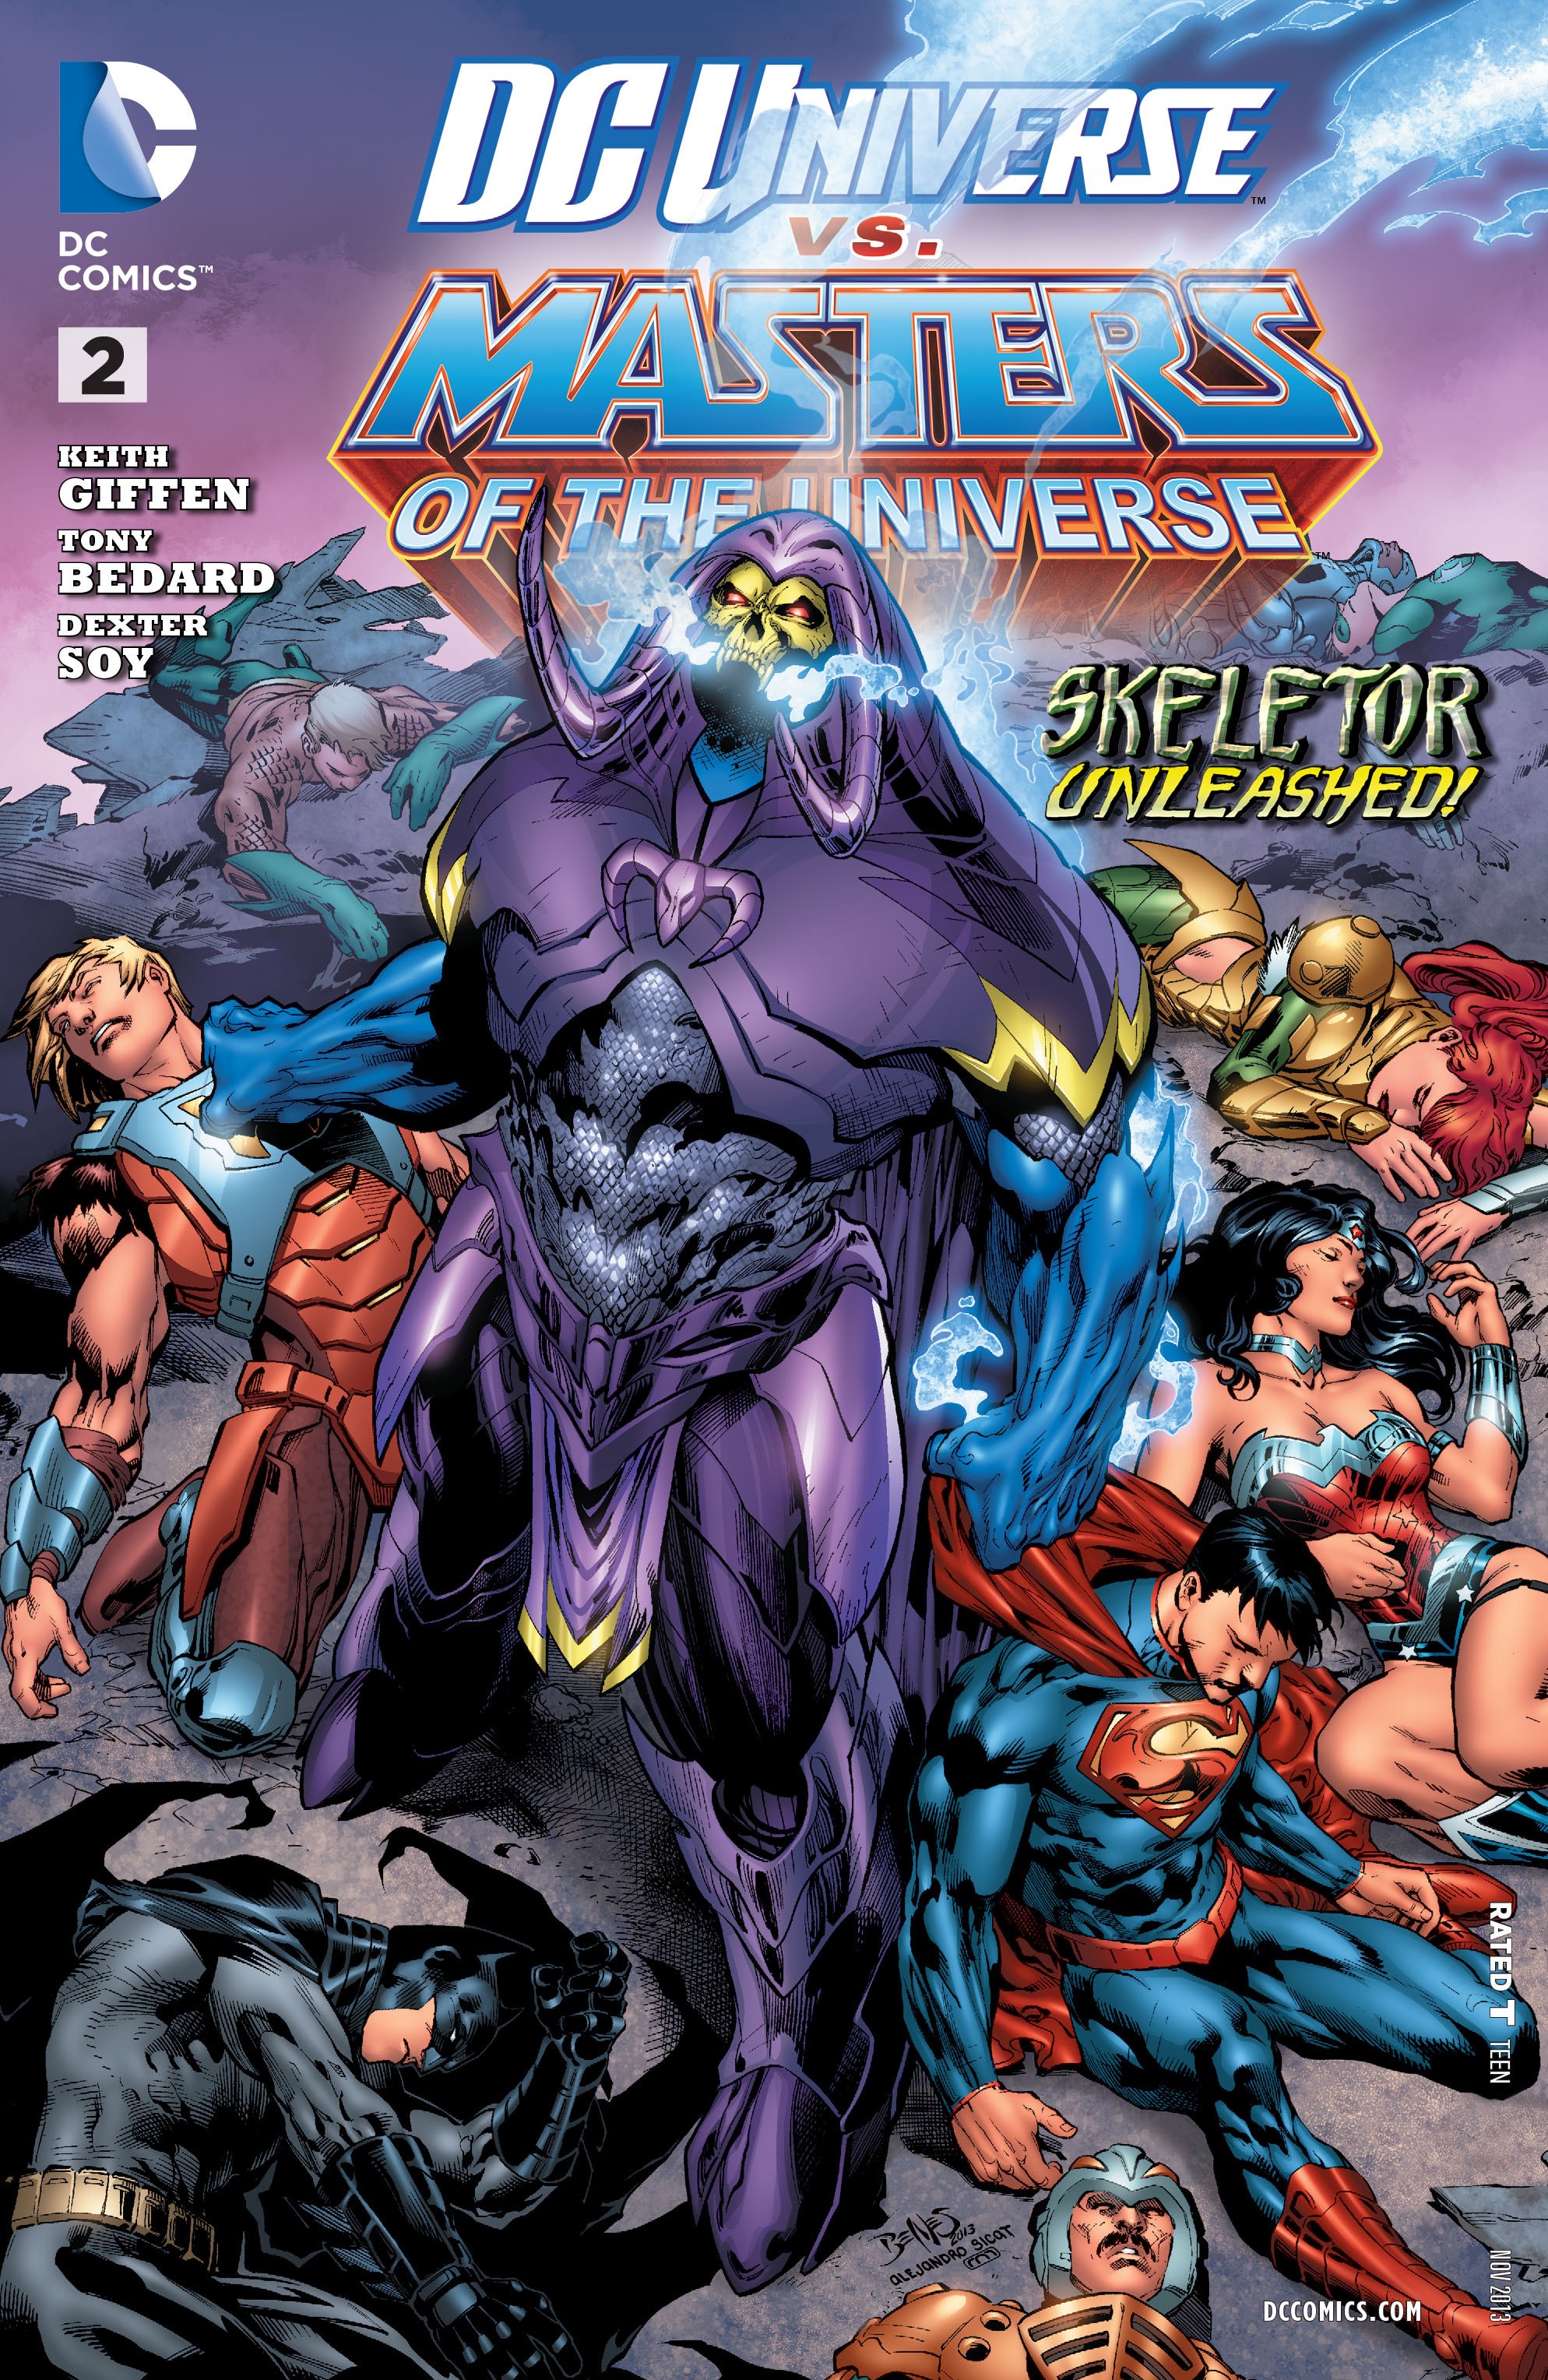 DC Universe vs. The Masters of the Universe Vol. 1 #2